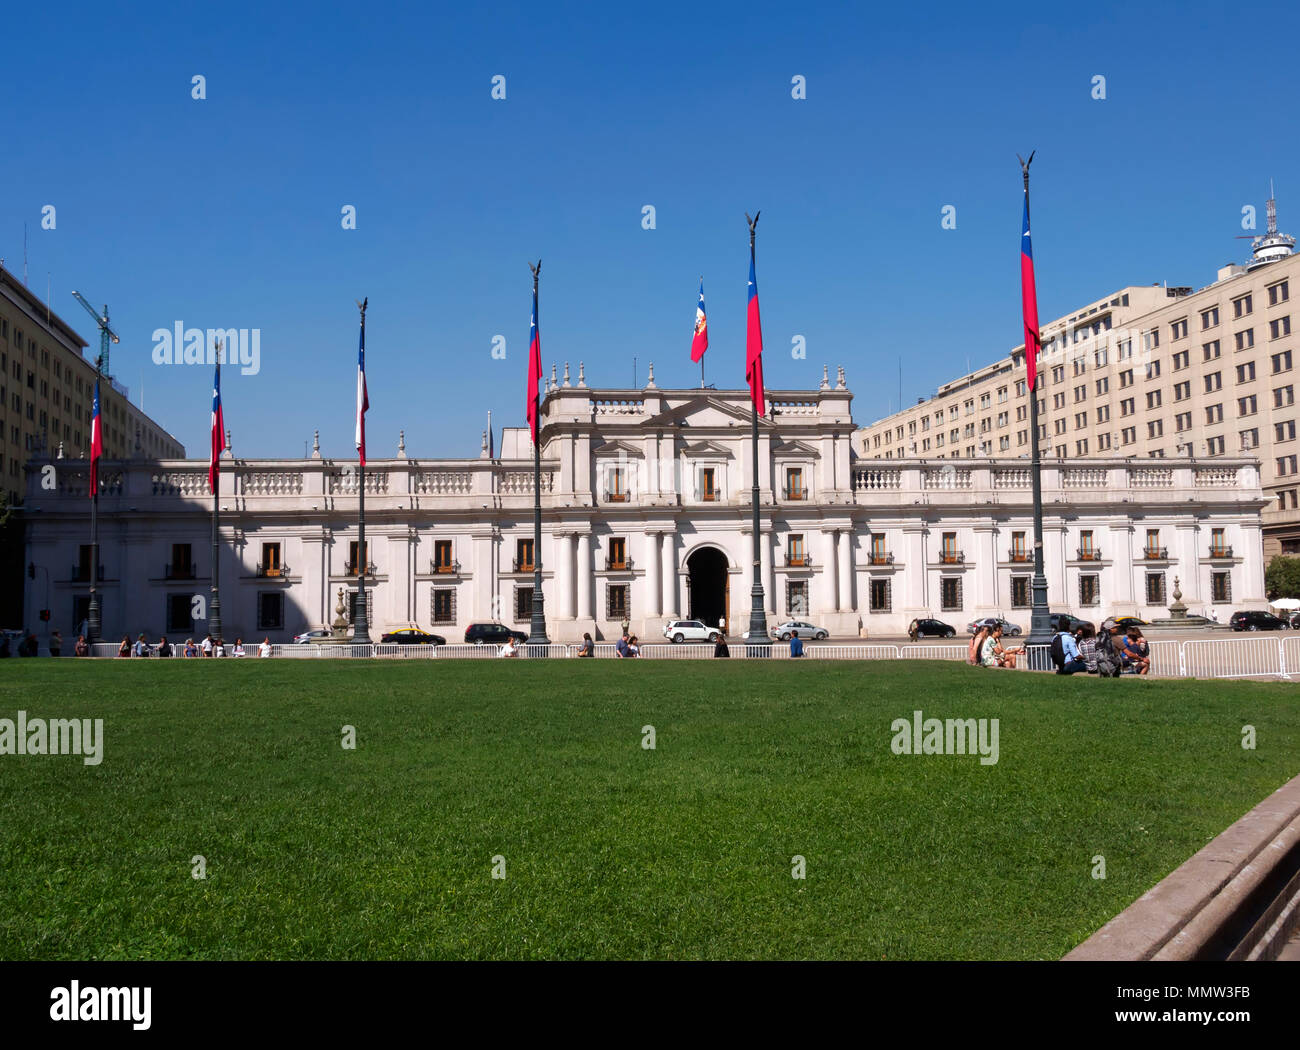 Palacio de La Moneda, Palace of the Mint, La Moneda, is the seat of the President of the Republic of Chile Stock Photo